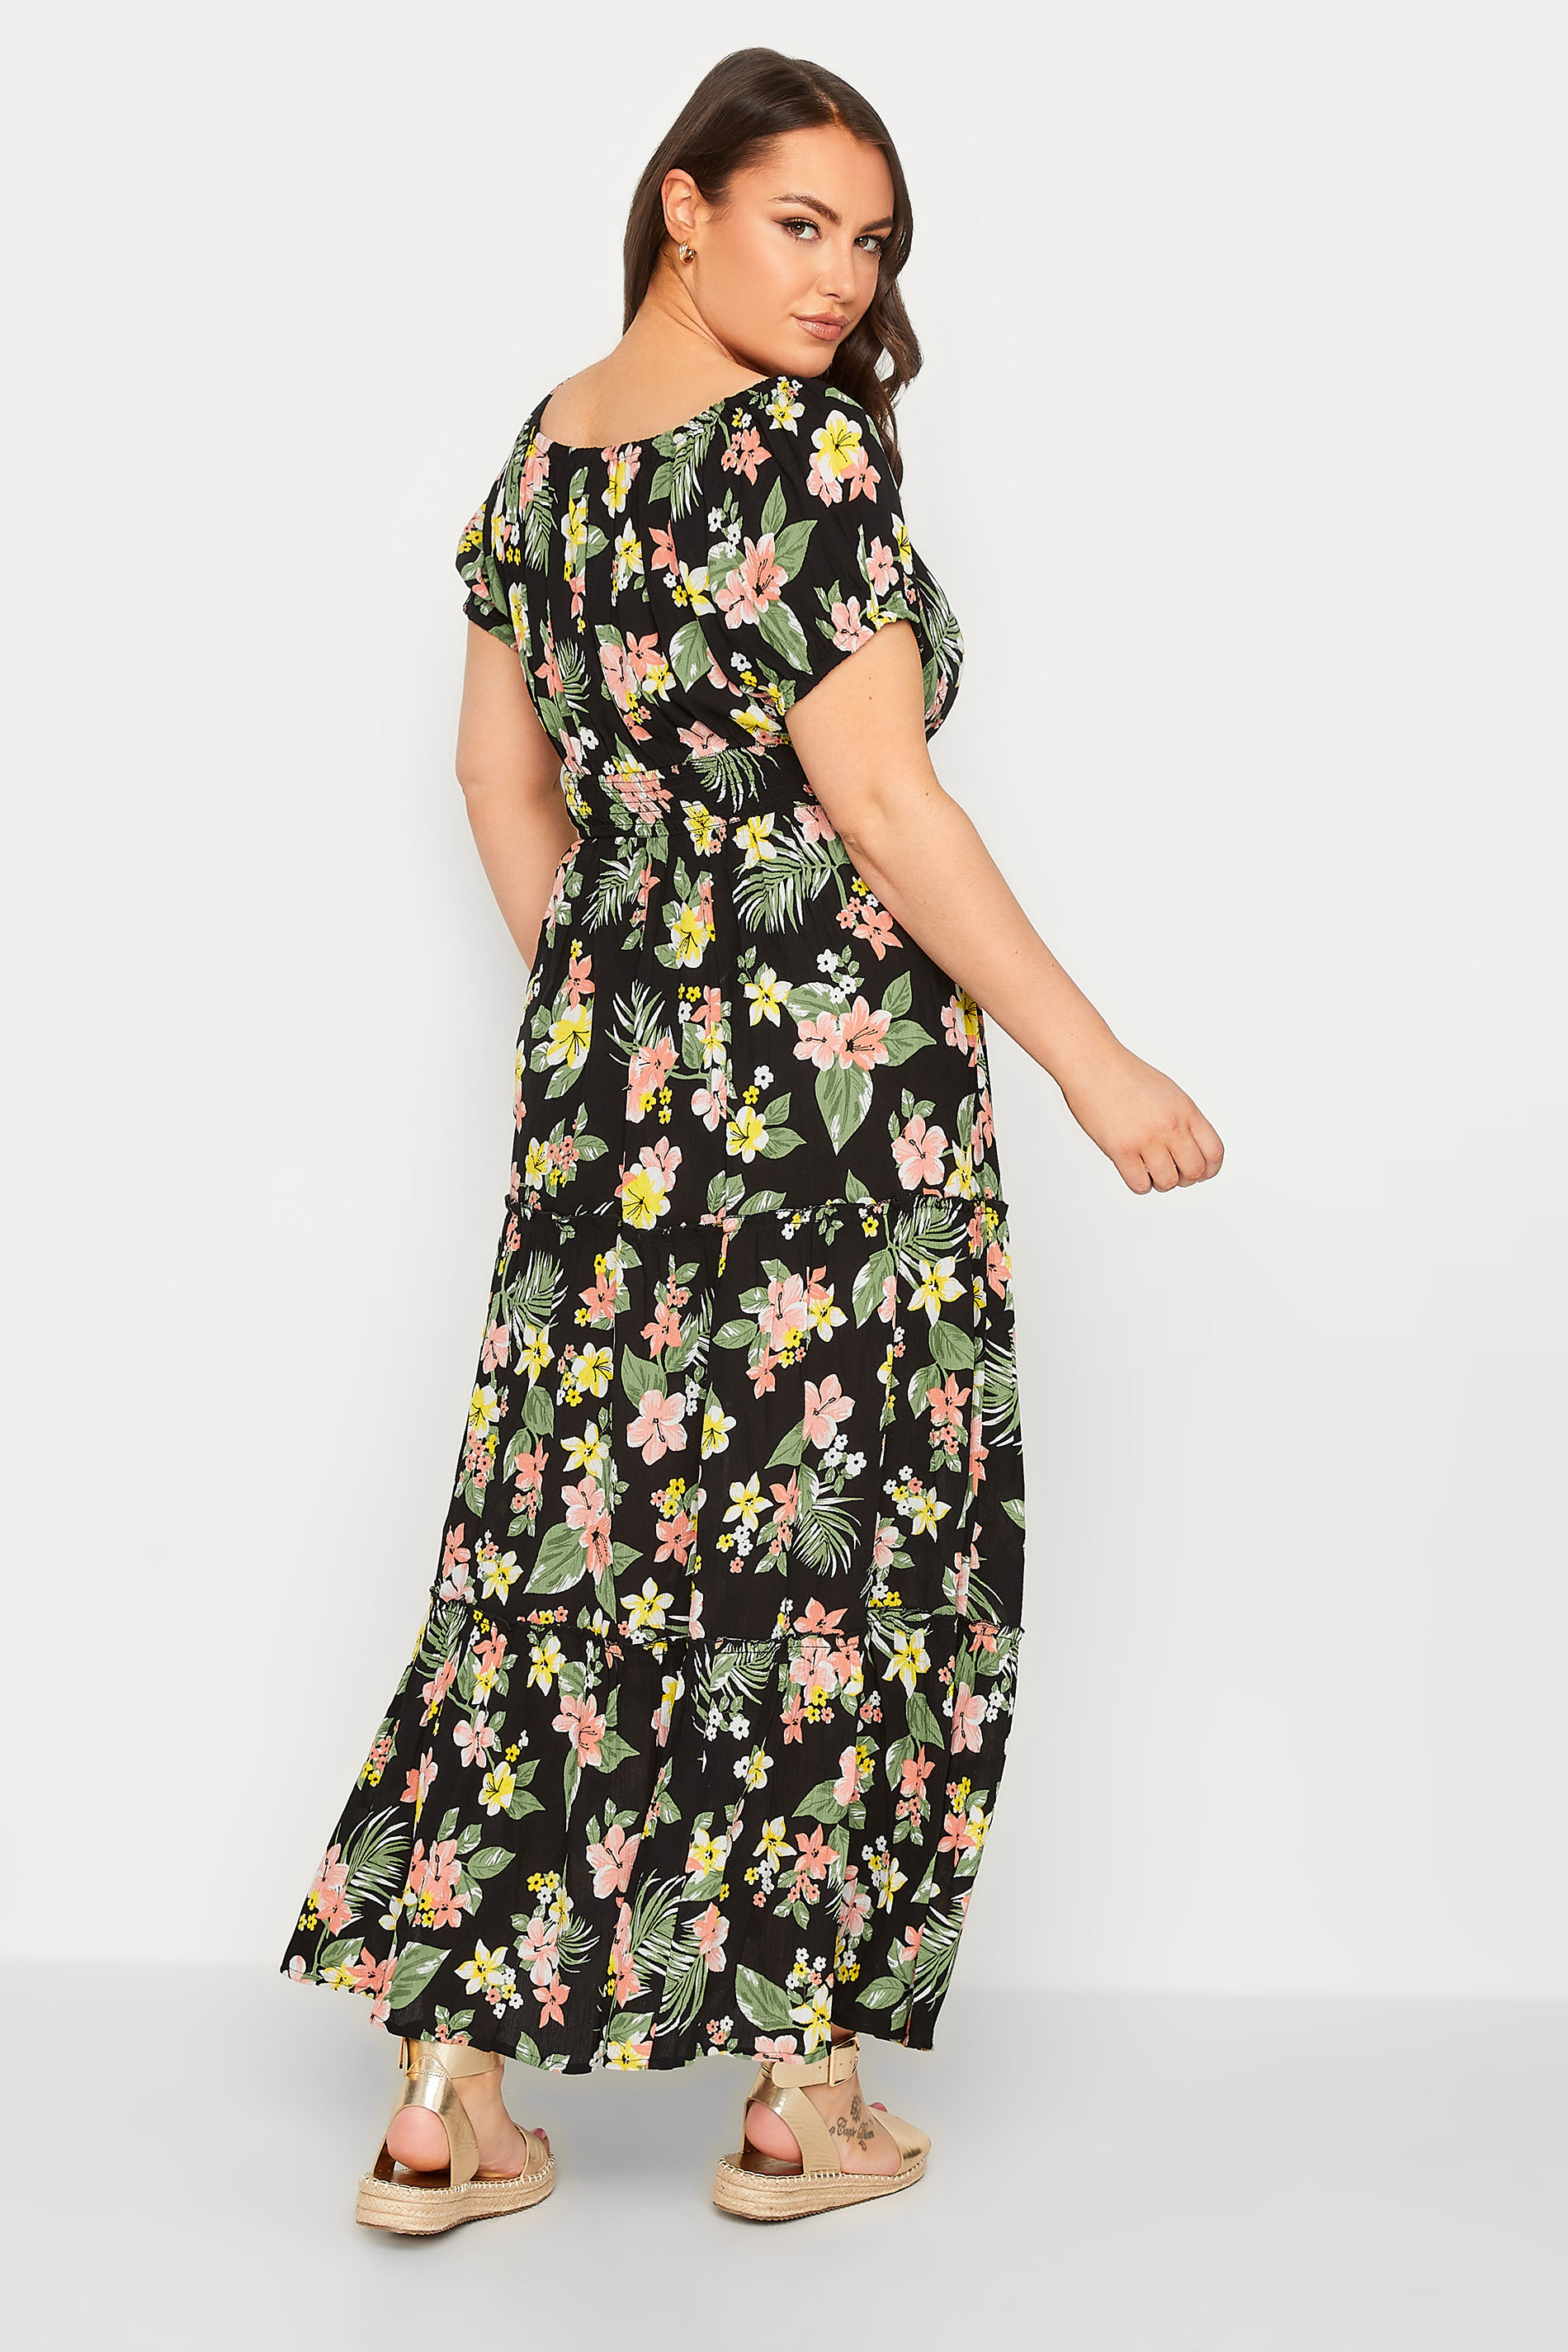 YOURS Curve Plus Size Black Tropical Print Bardot Maxi Dress | Yours Clothing  3